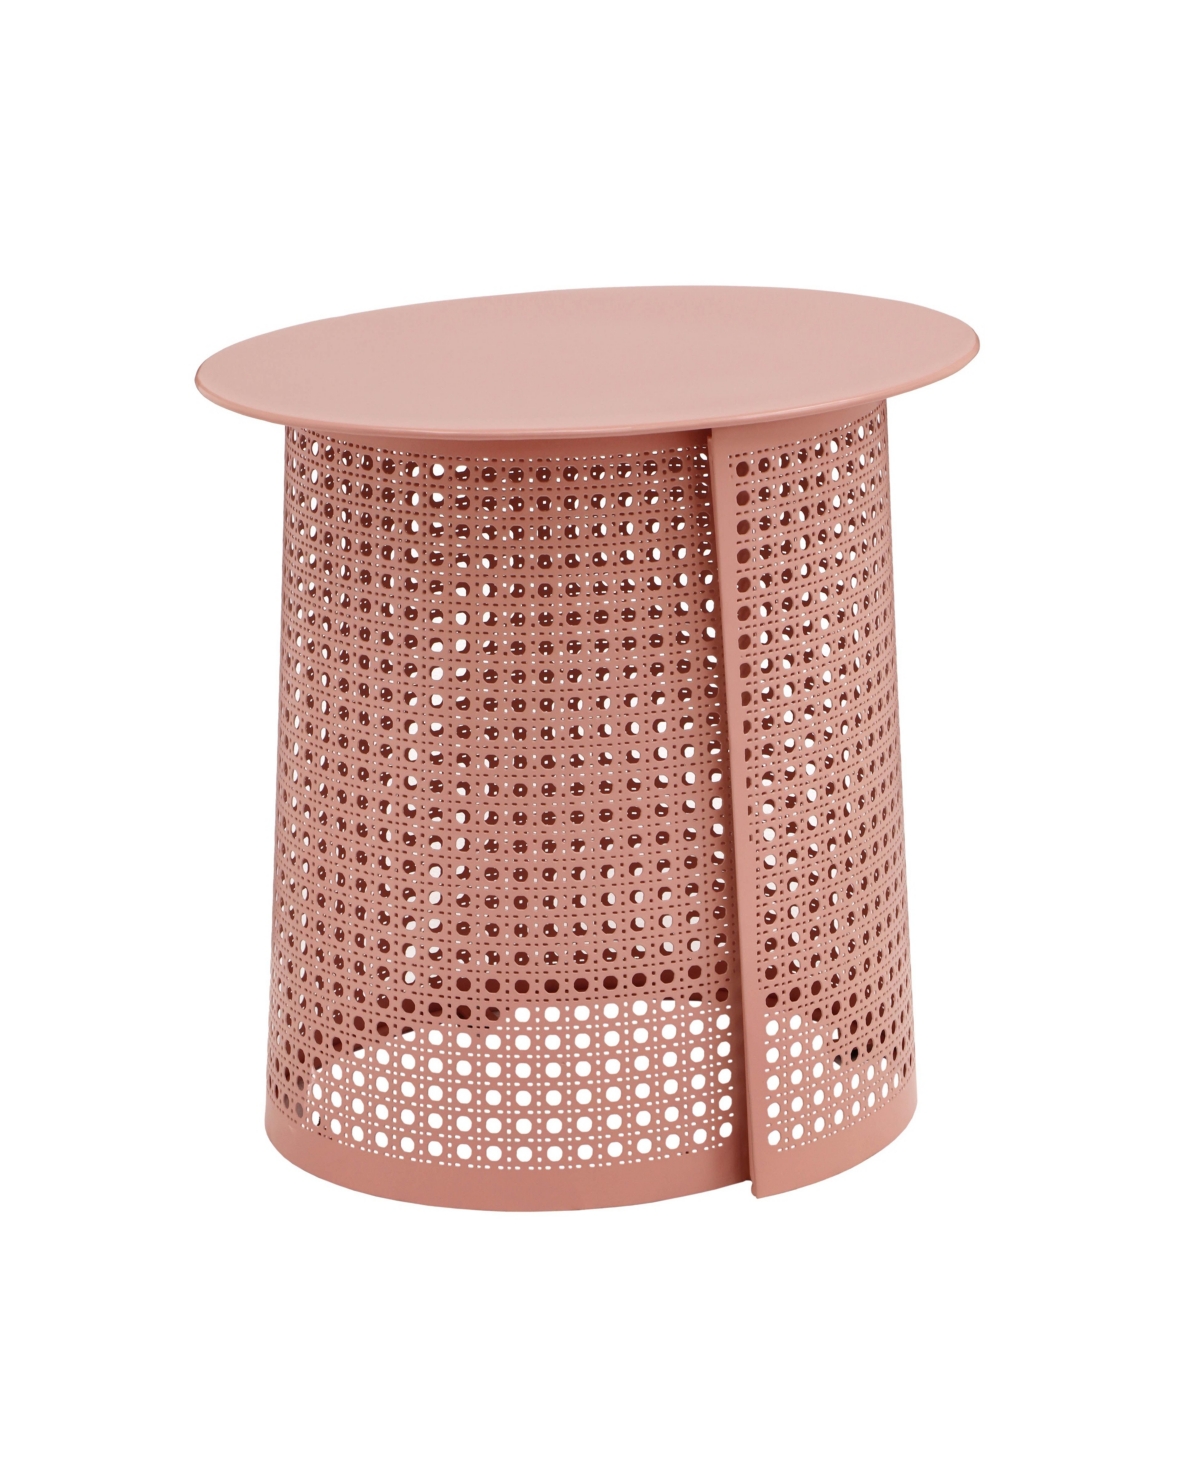 Tov Furniture Pesky Side Table In Pink